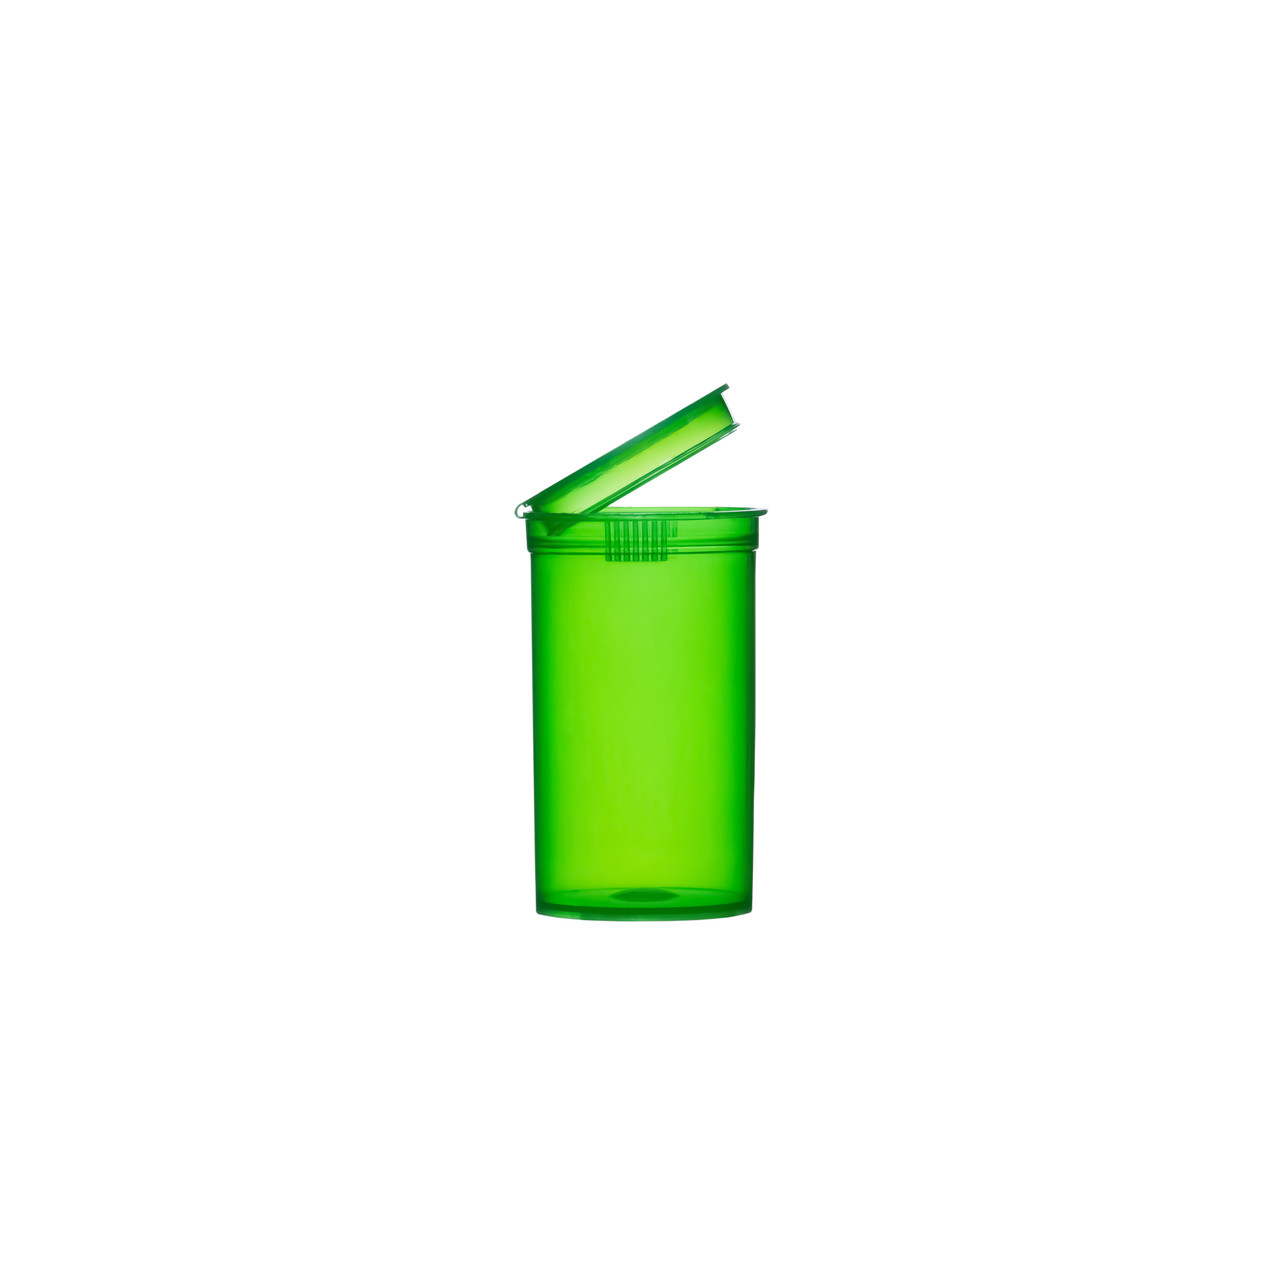 19 Dram, 225 pcs, Transparent Green Pop Top Containers Pop Top Vial.